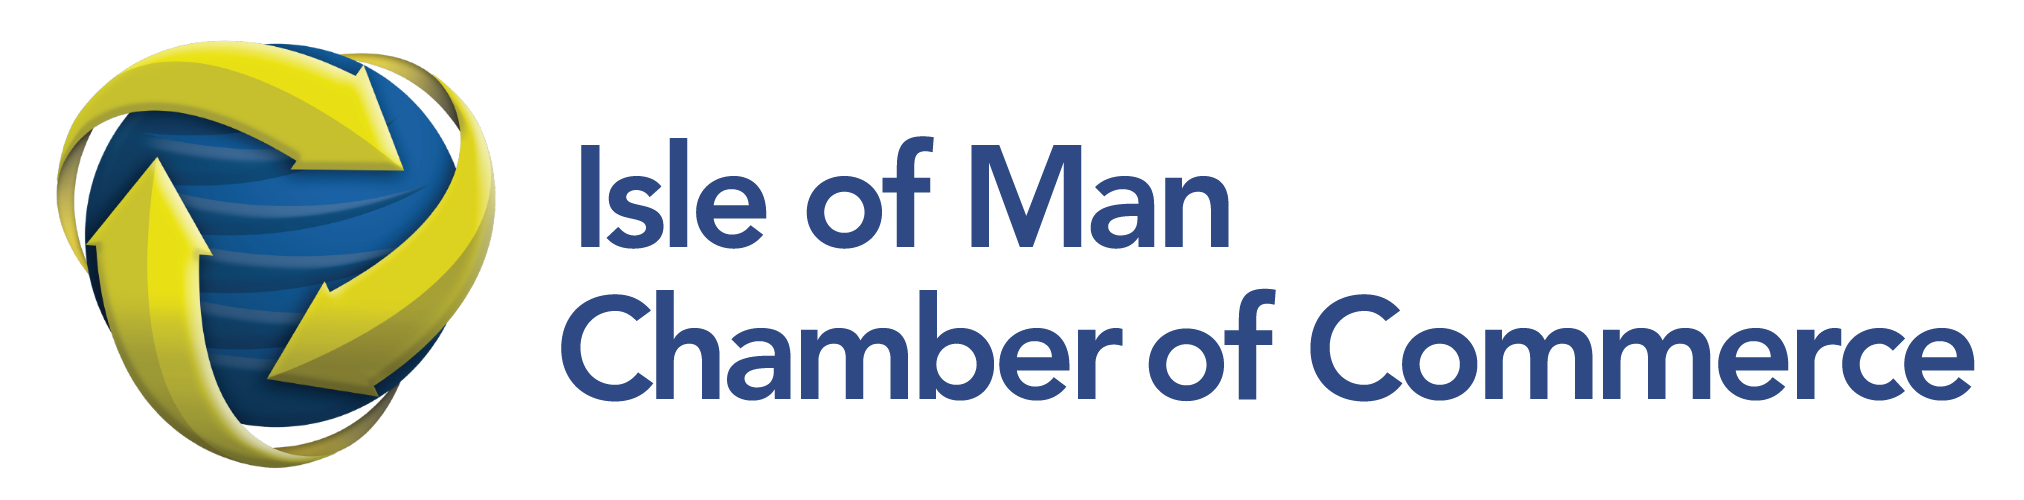 Isle of Man Chamber of Commerce logo